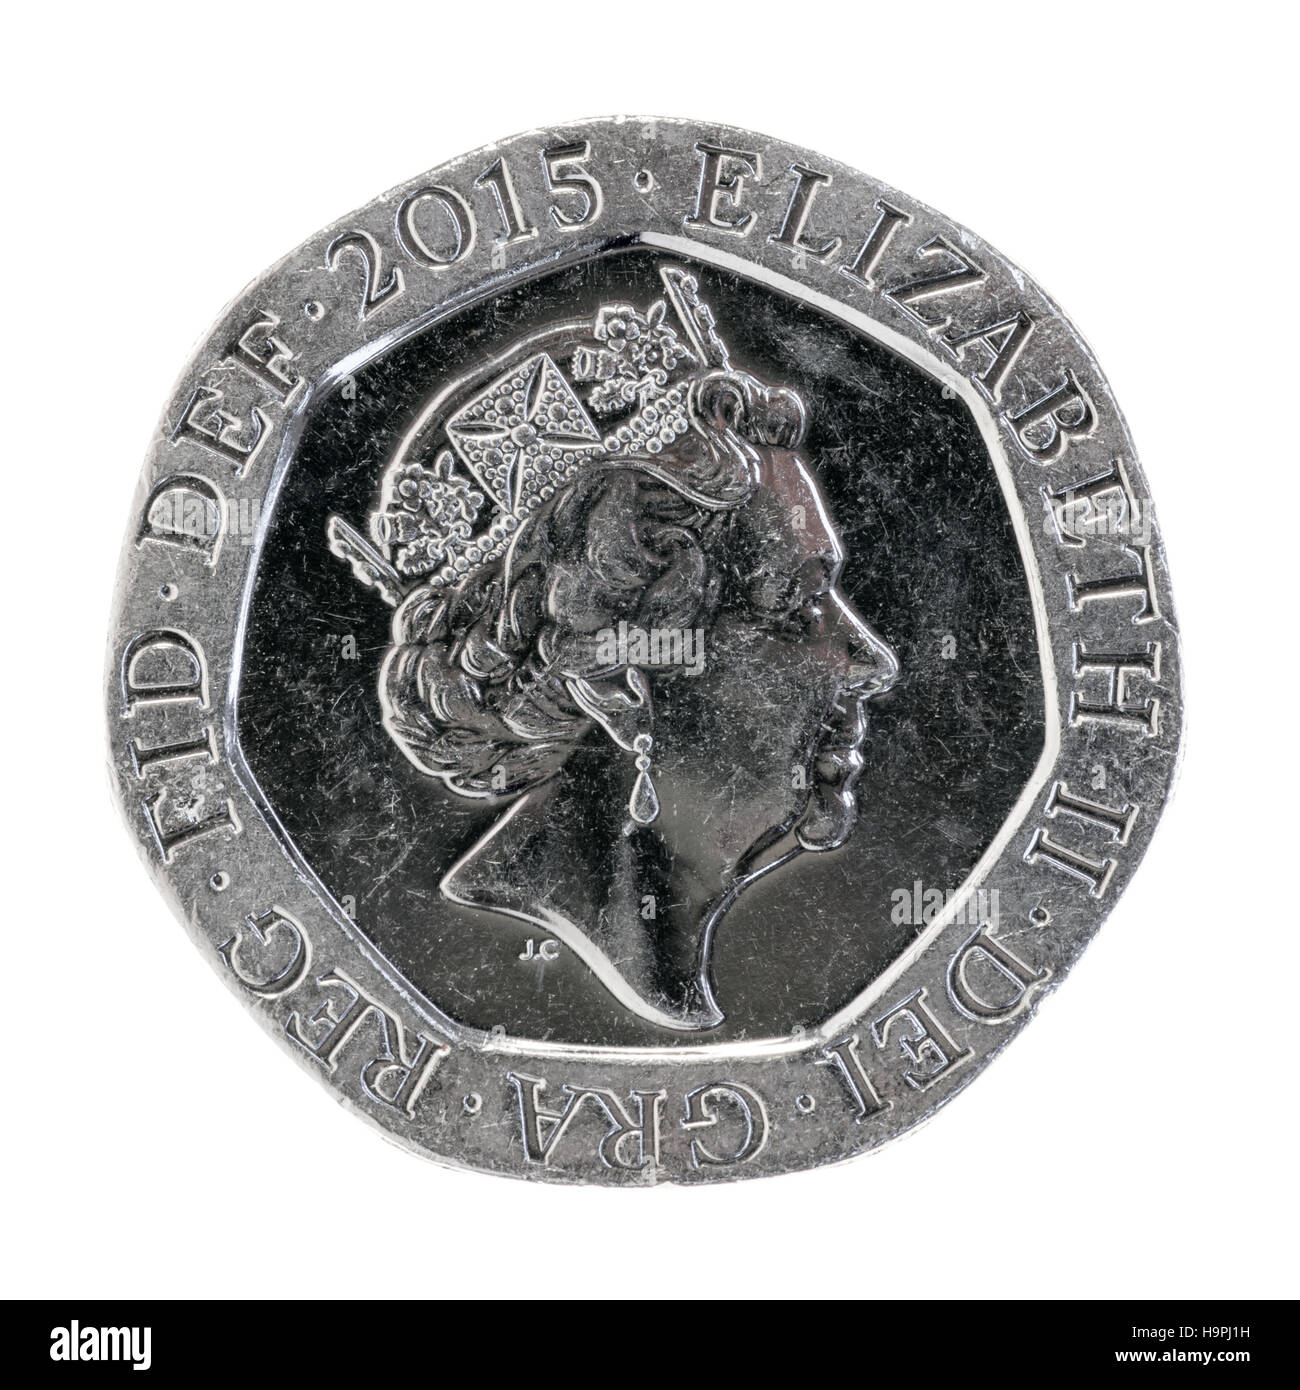 2008 Nuevo diseño para British coins 20 peniques pedazo Foto de stock